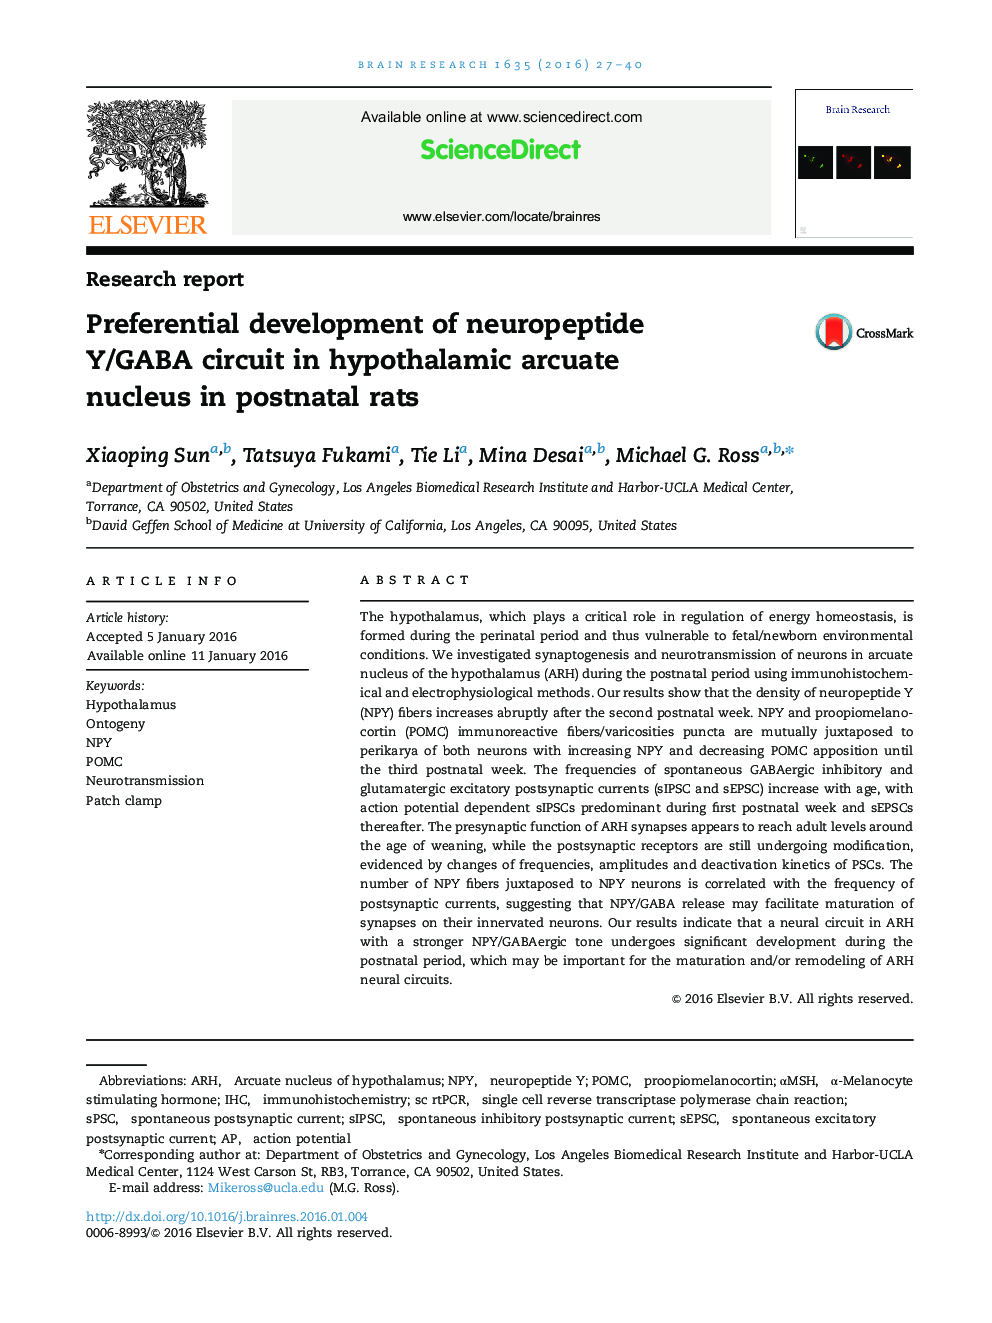 Research reportPreferential development of neuropeptide Y/GABA circuit in hypothalamic arcuate nucleus in postnatal rats